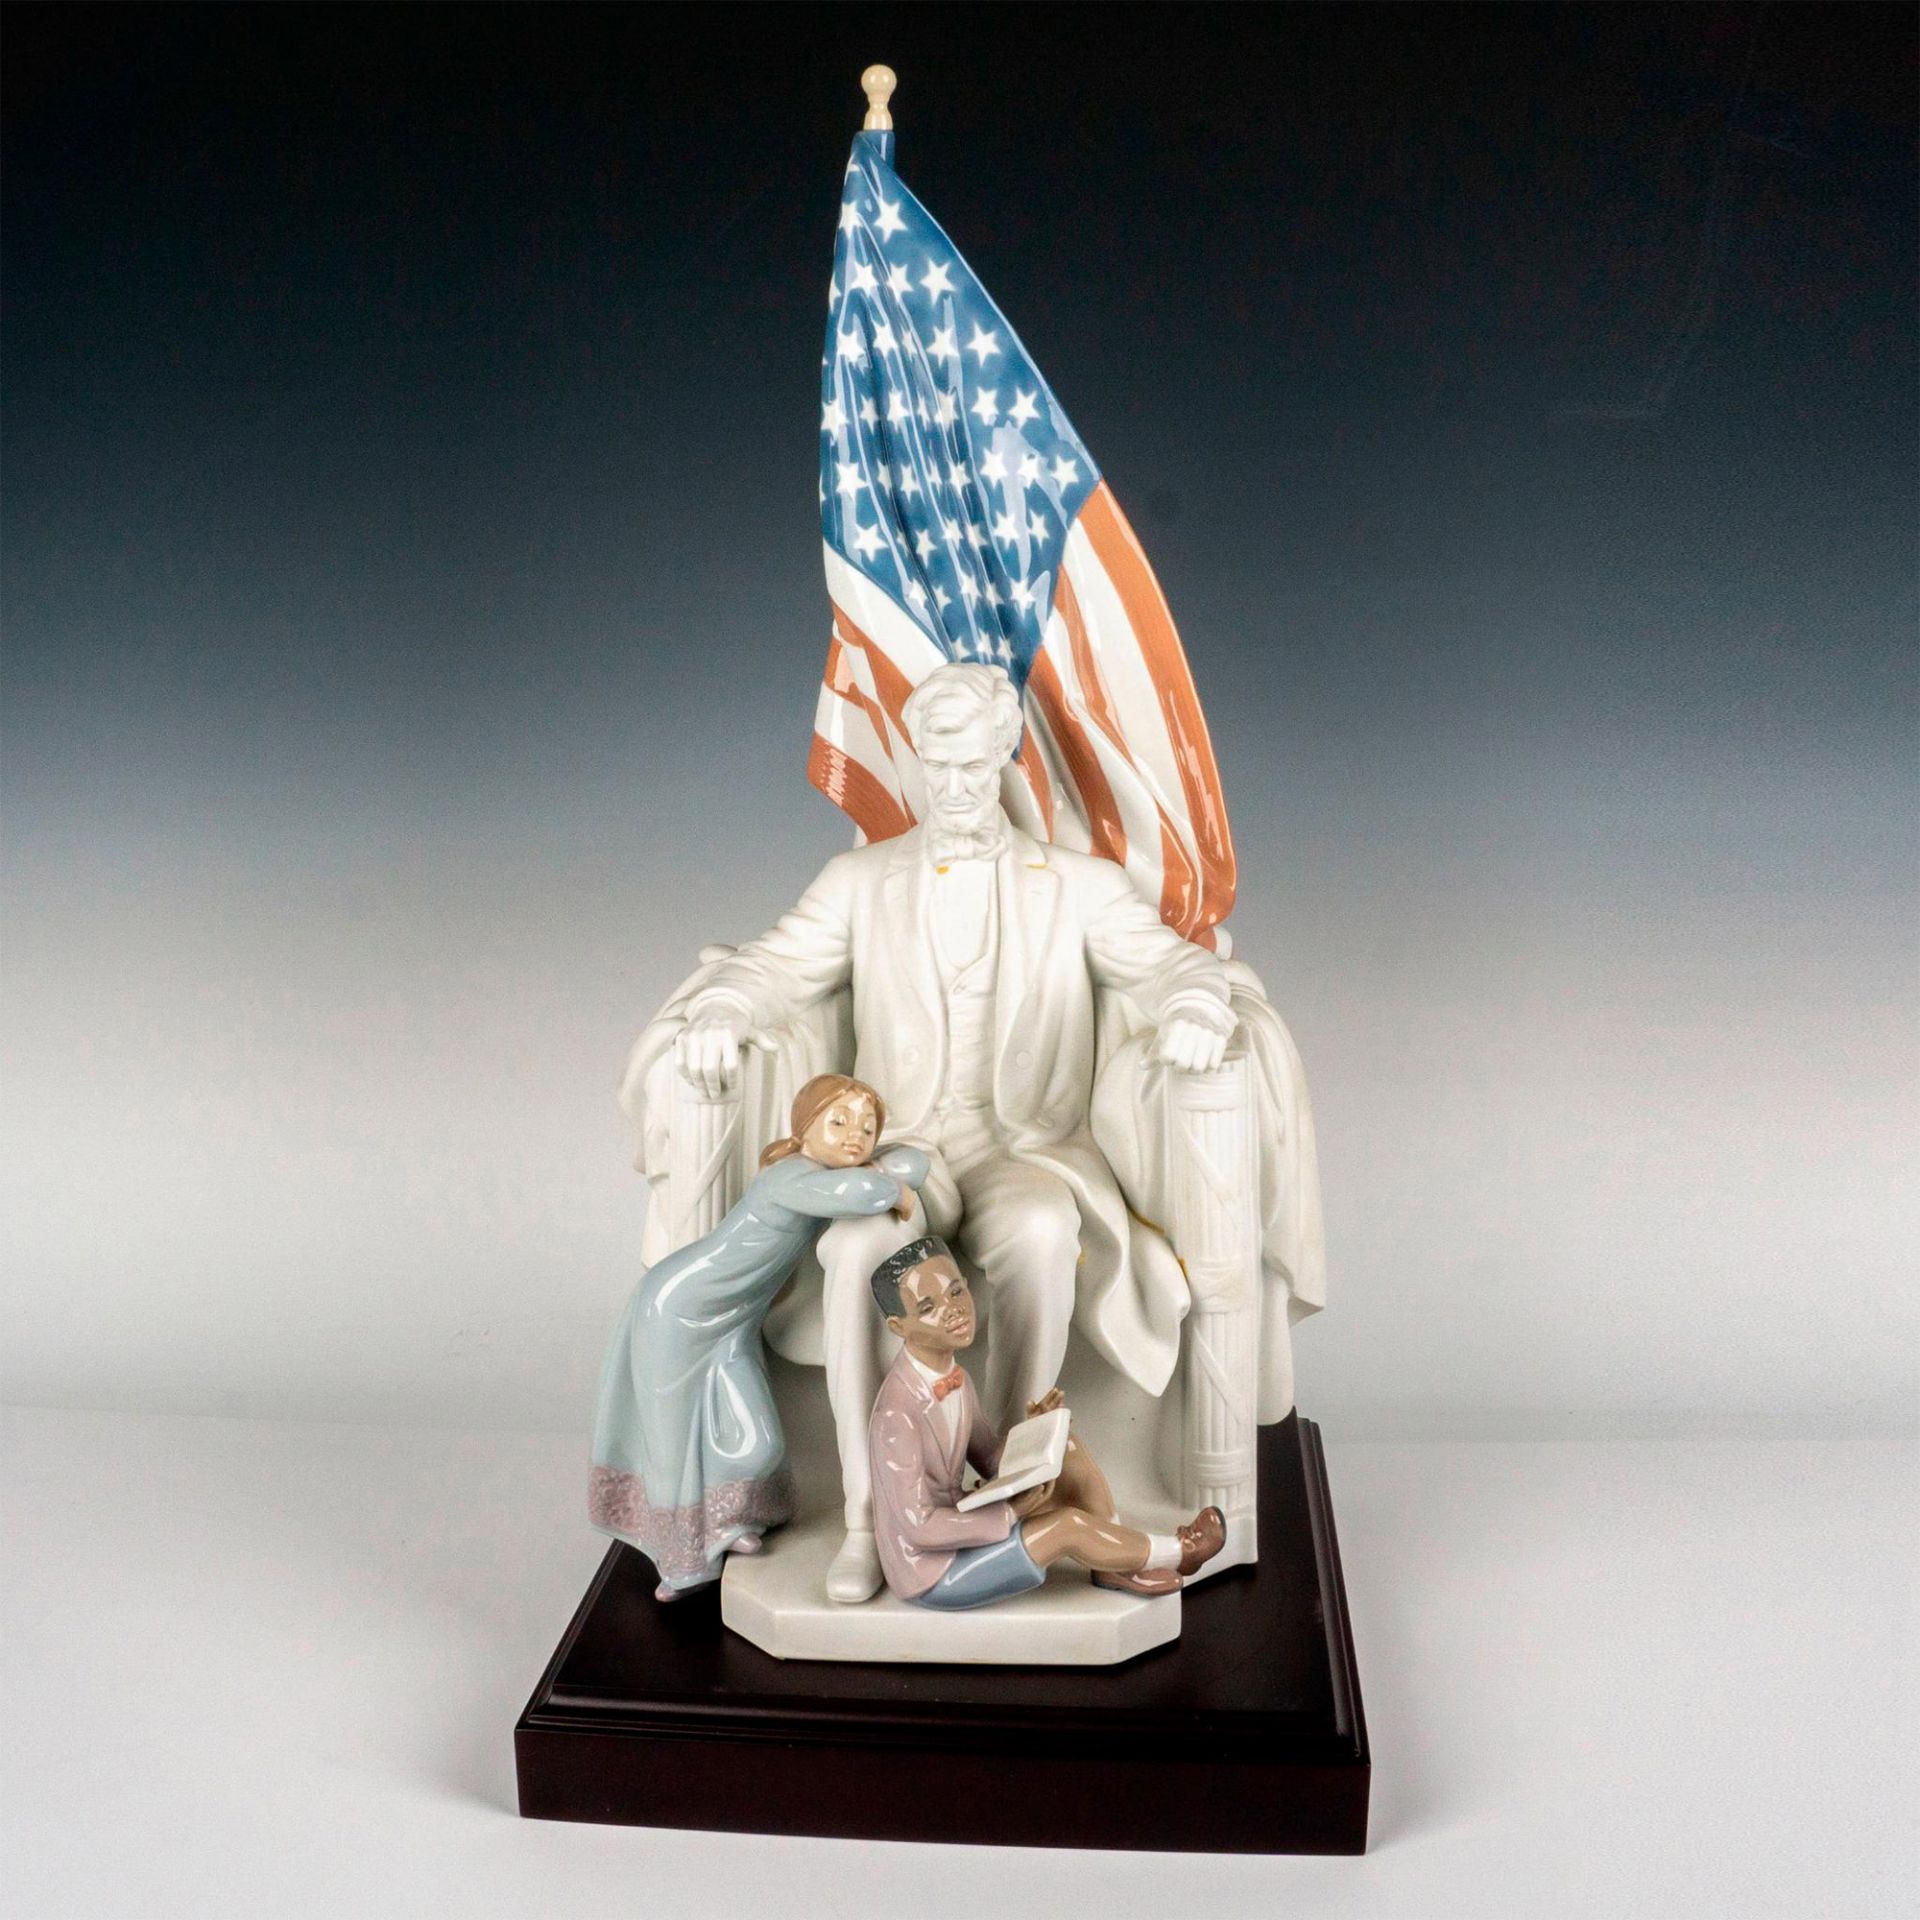 Abraham Lincoln 1007554 Ltd. - Lladro Porcelain Figurine